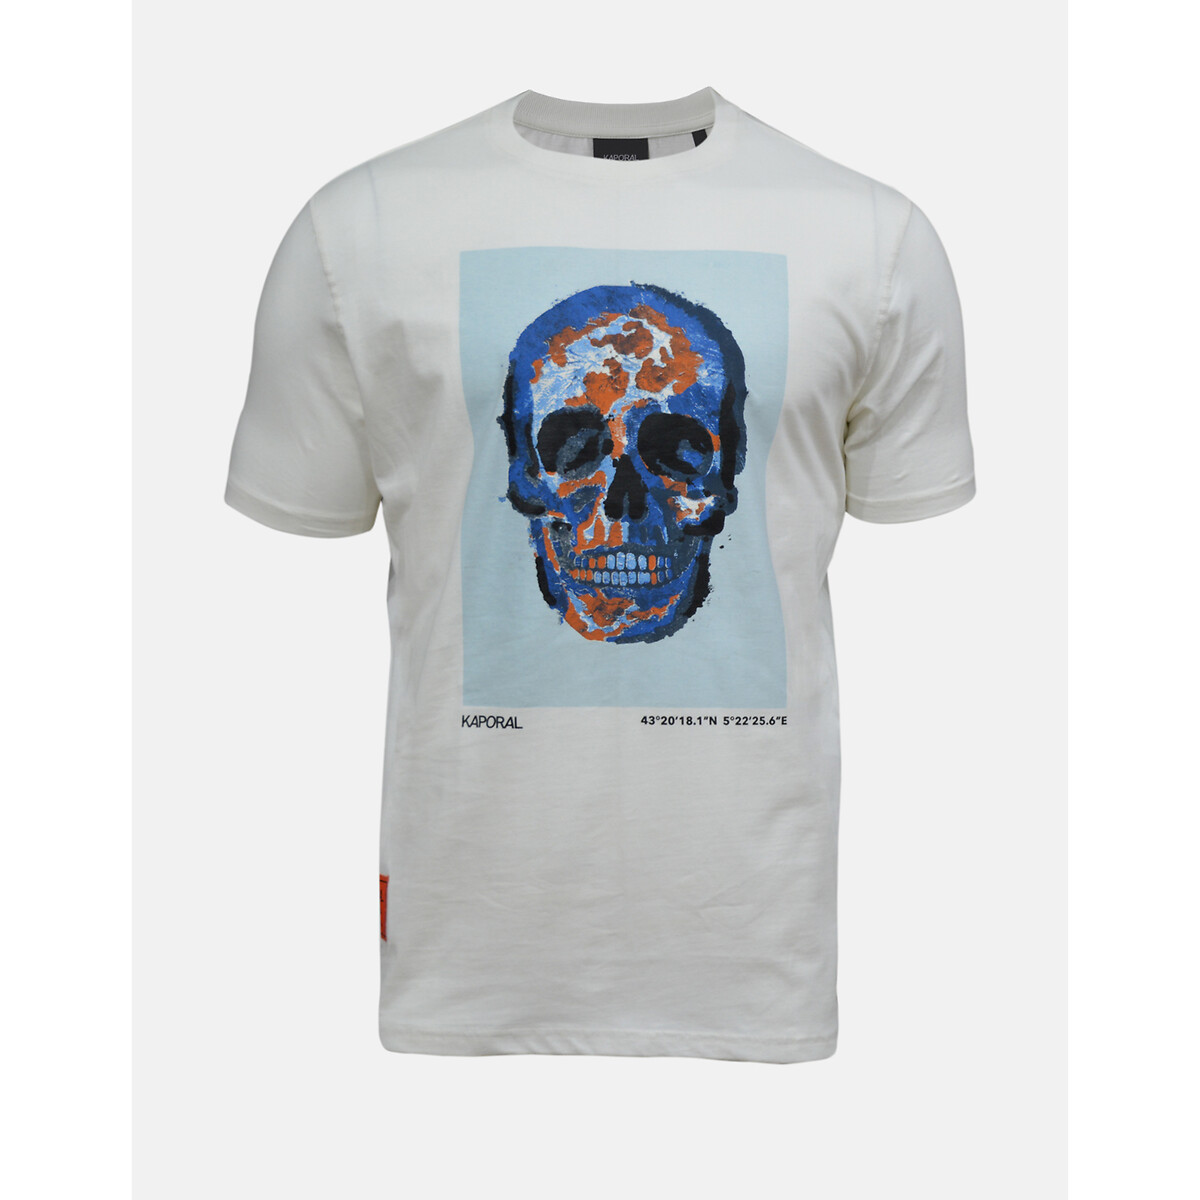 Bilki Skull Print T-Shirt in Cotton with Crew Neck